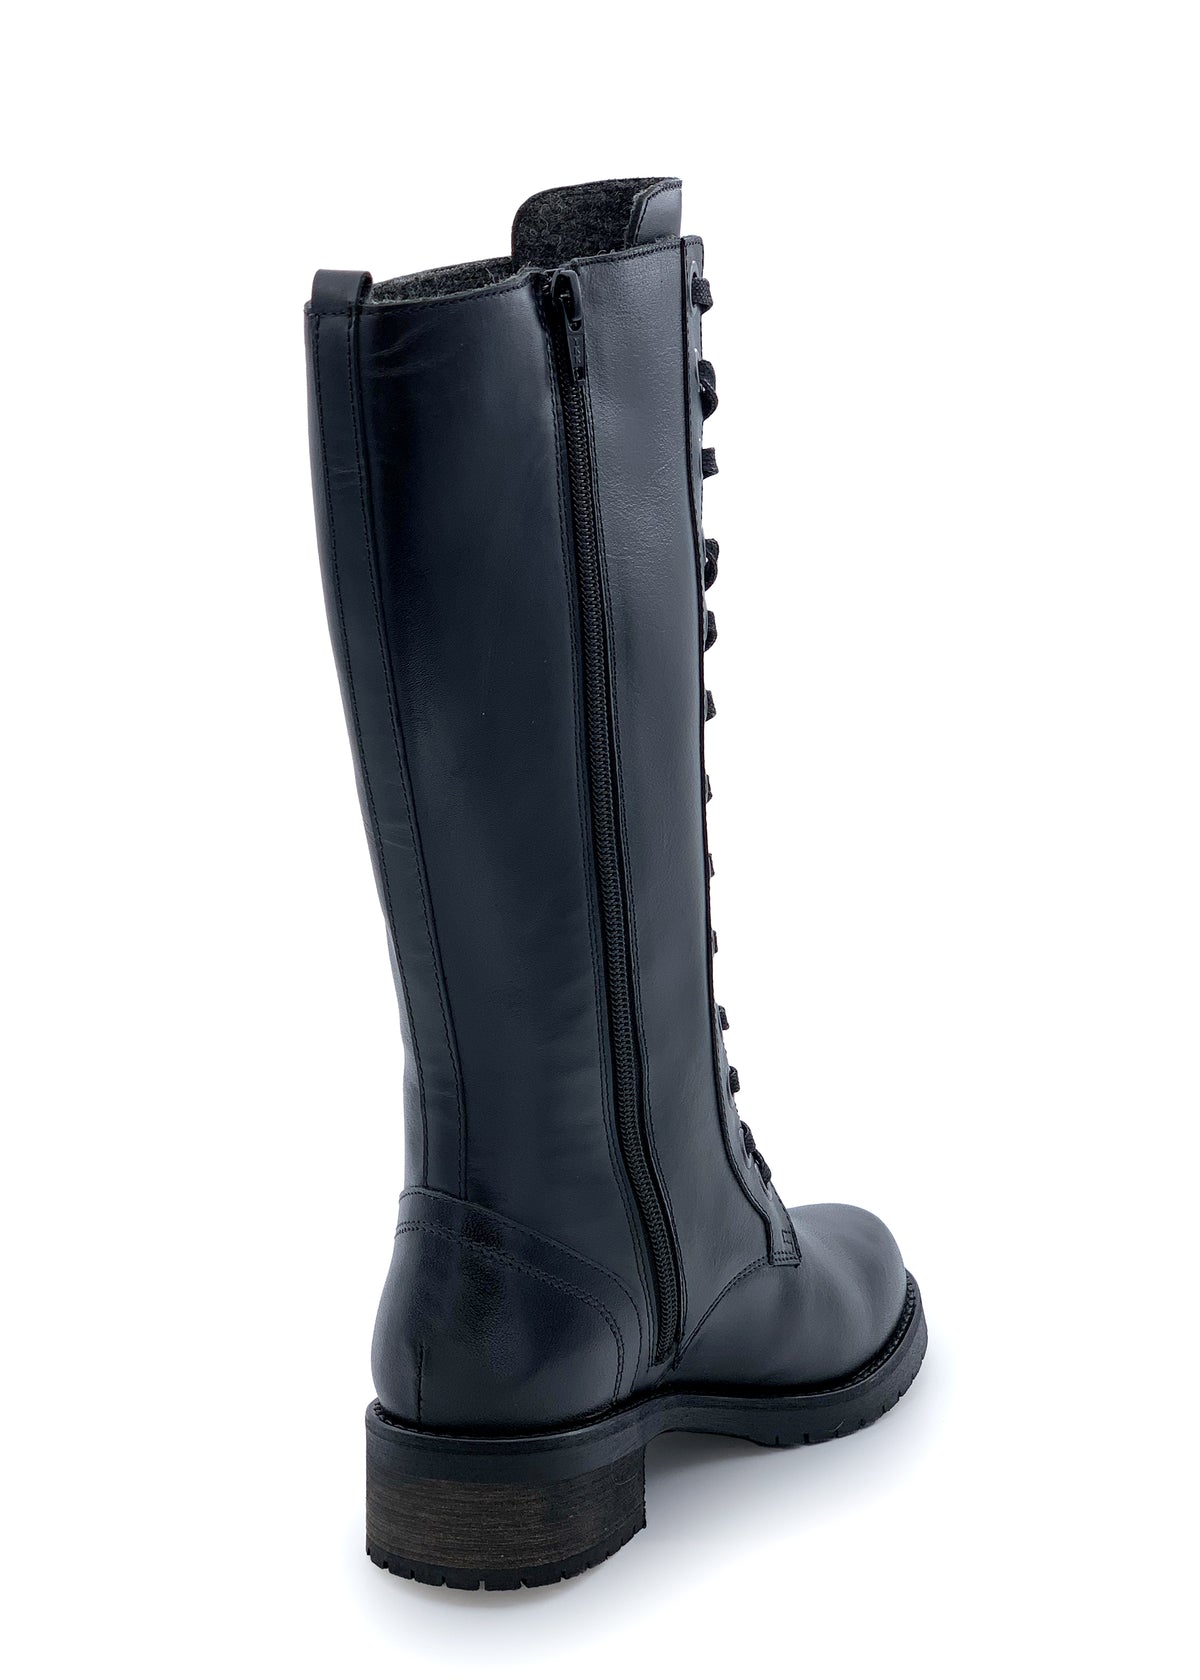 Maihari boots - Lotta, black